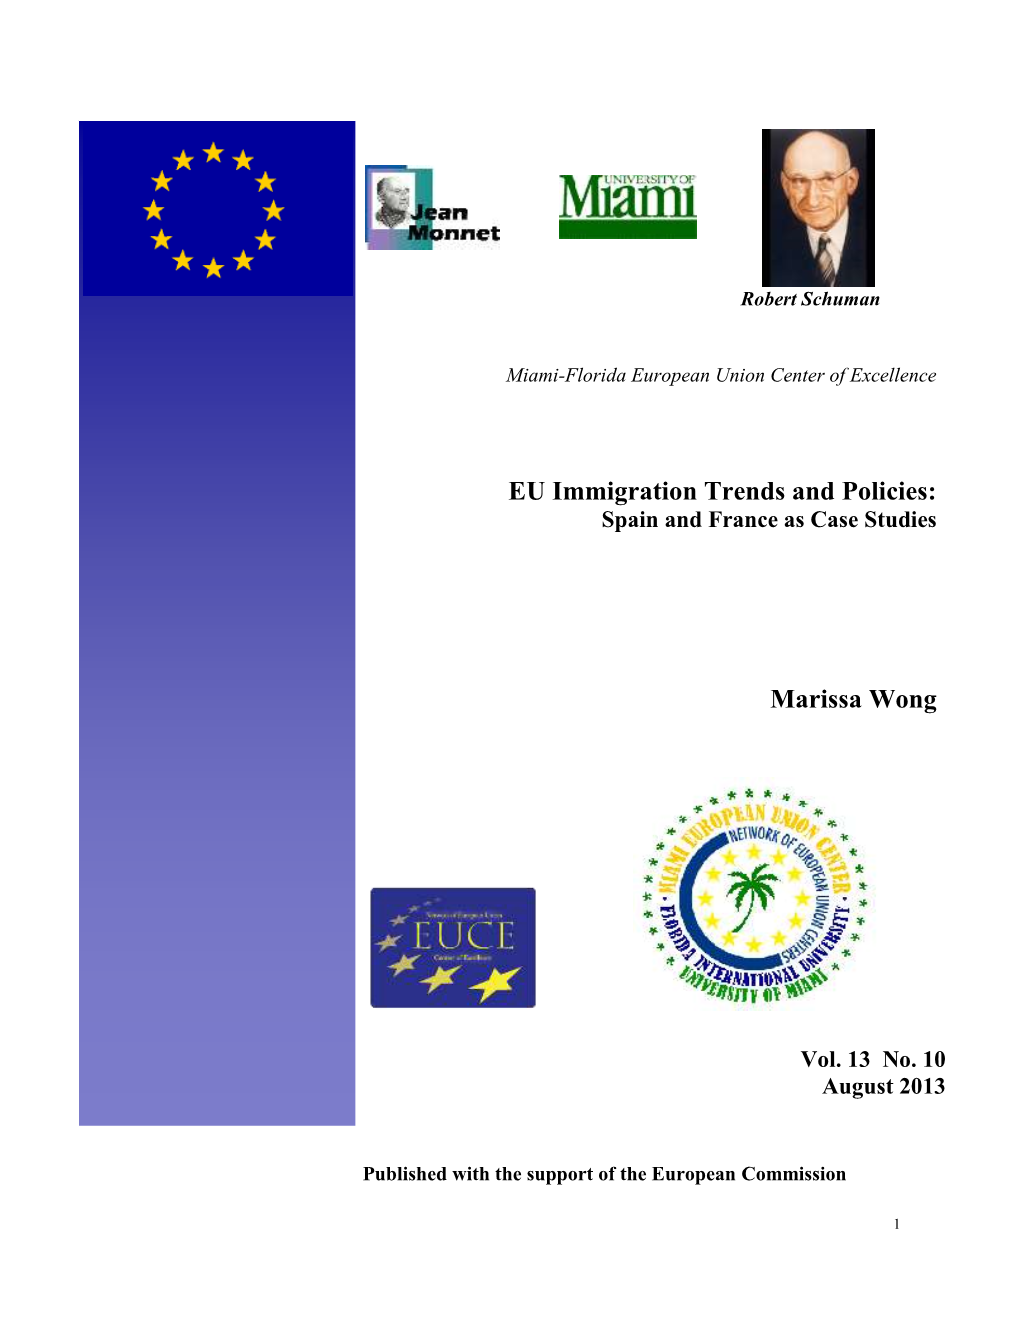 EU Immigration Trends and Policies: Marissa Wong